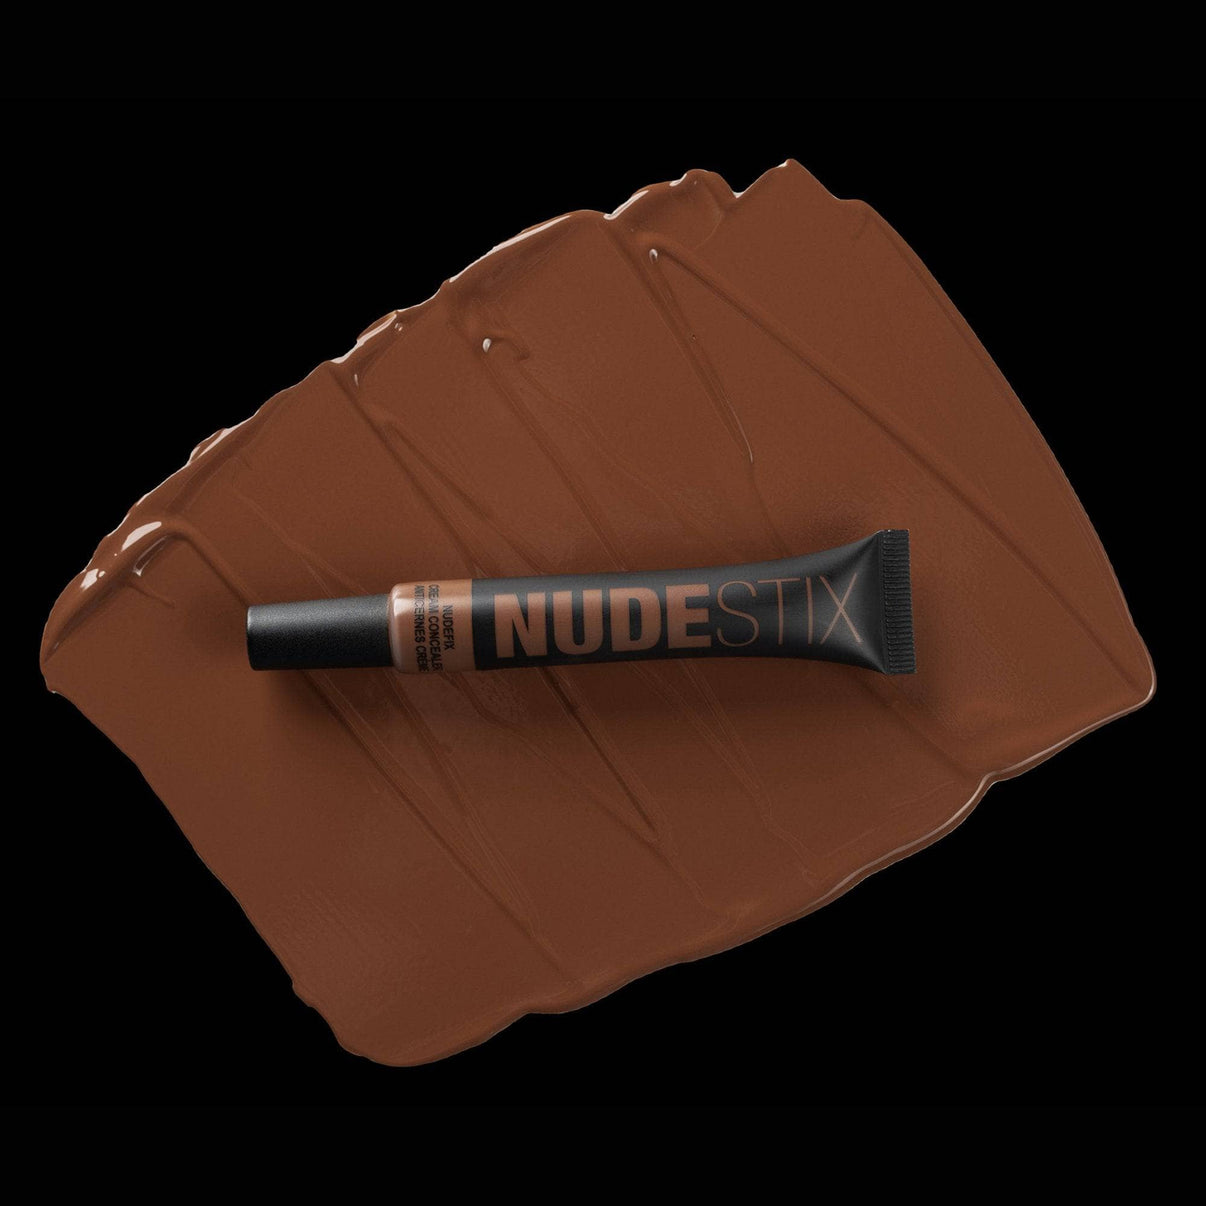 Nudefix cream concealer in shade nude 10 on top of texture swatch